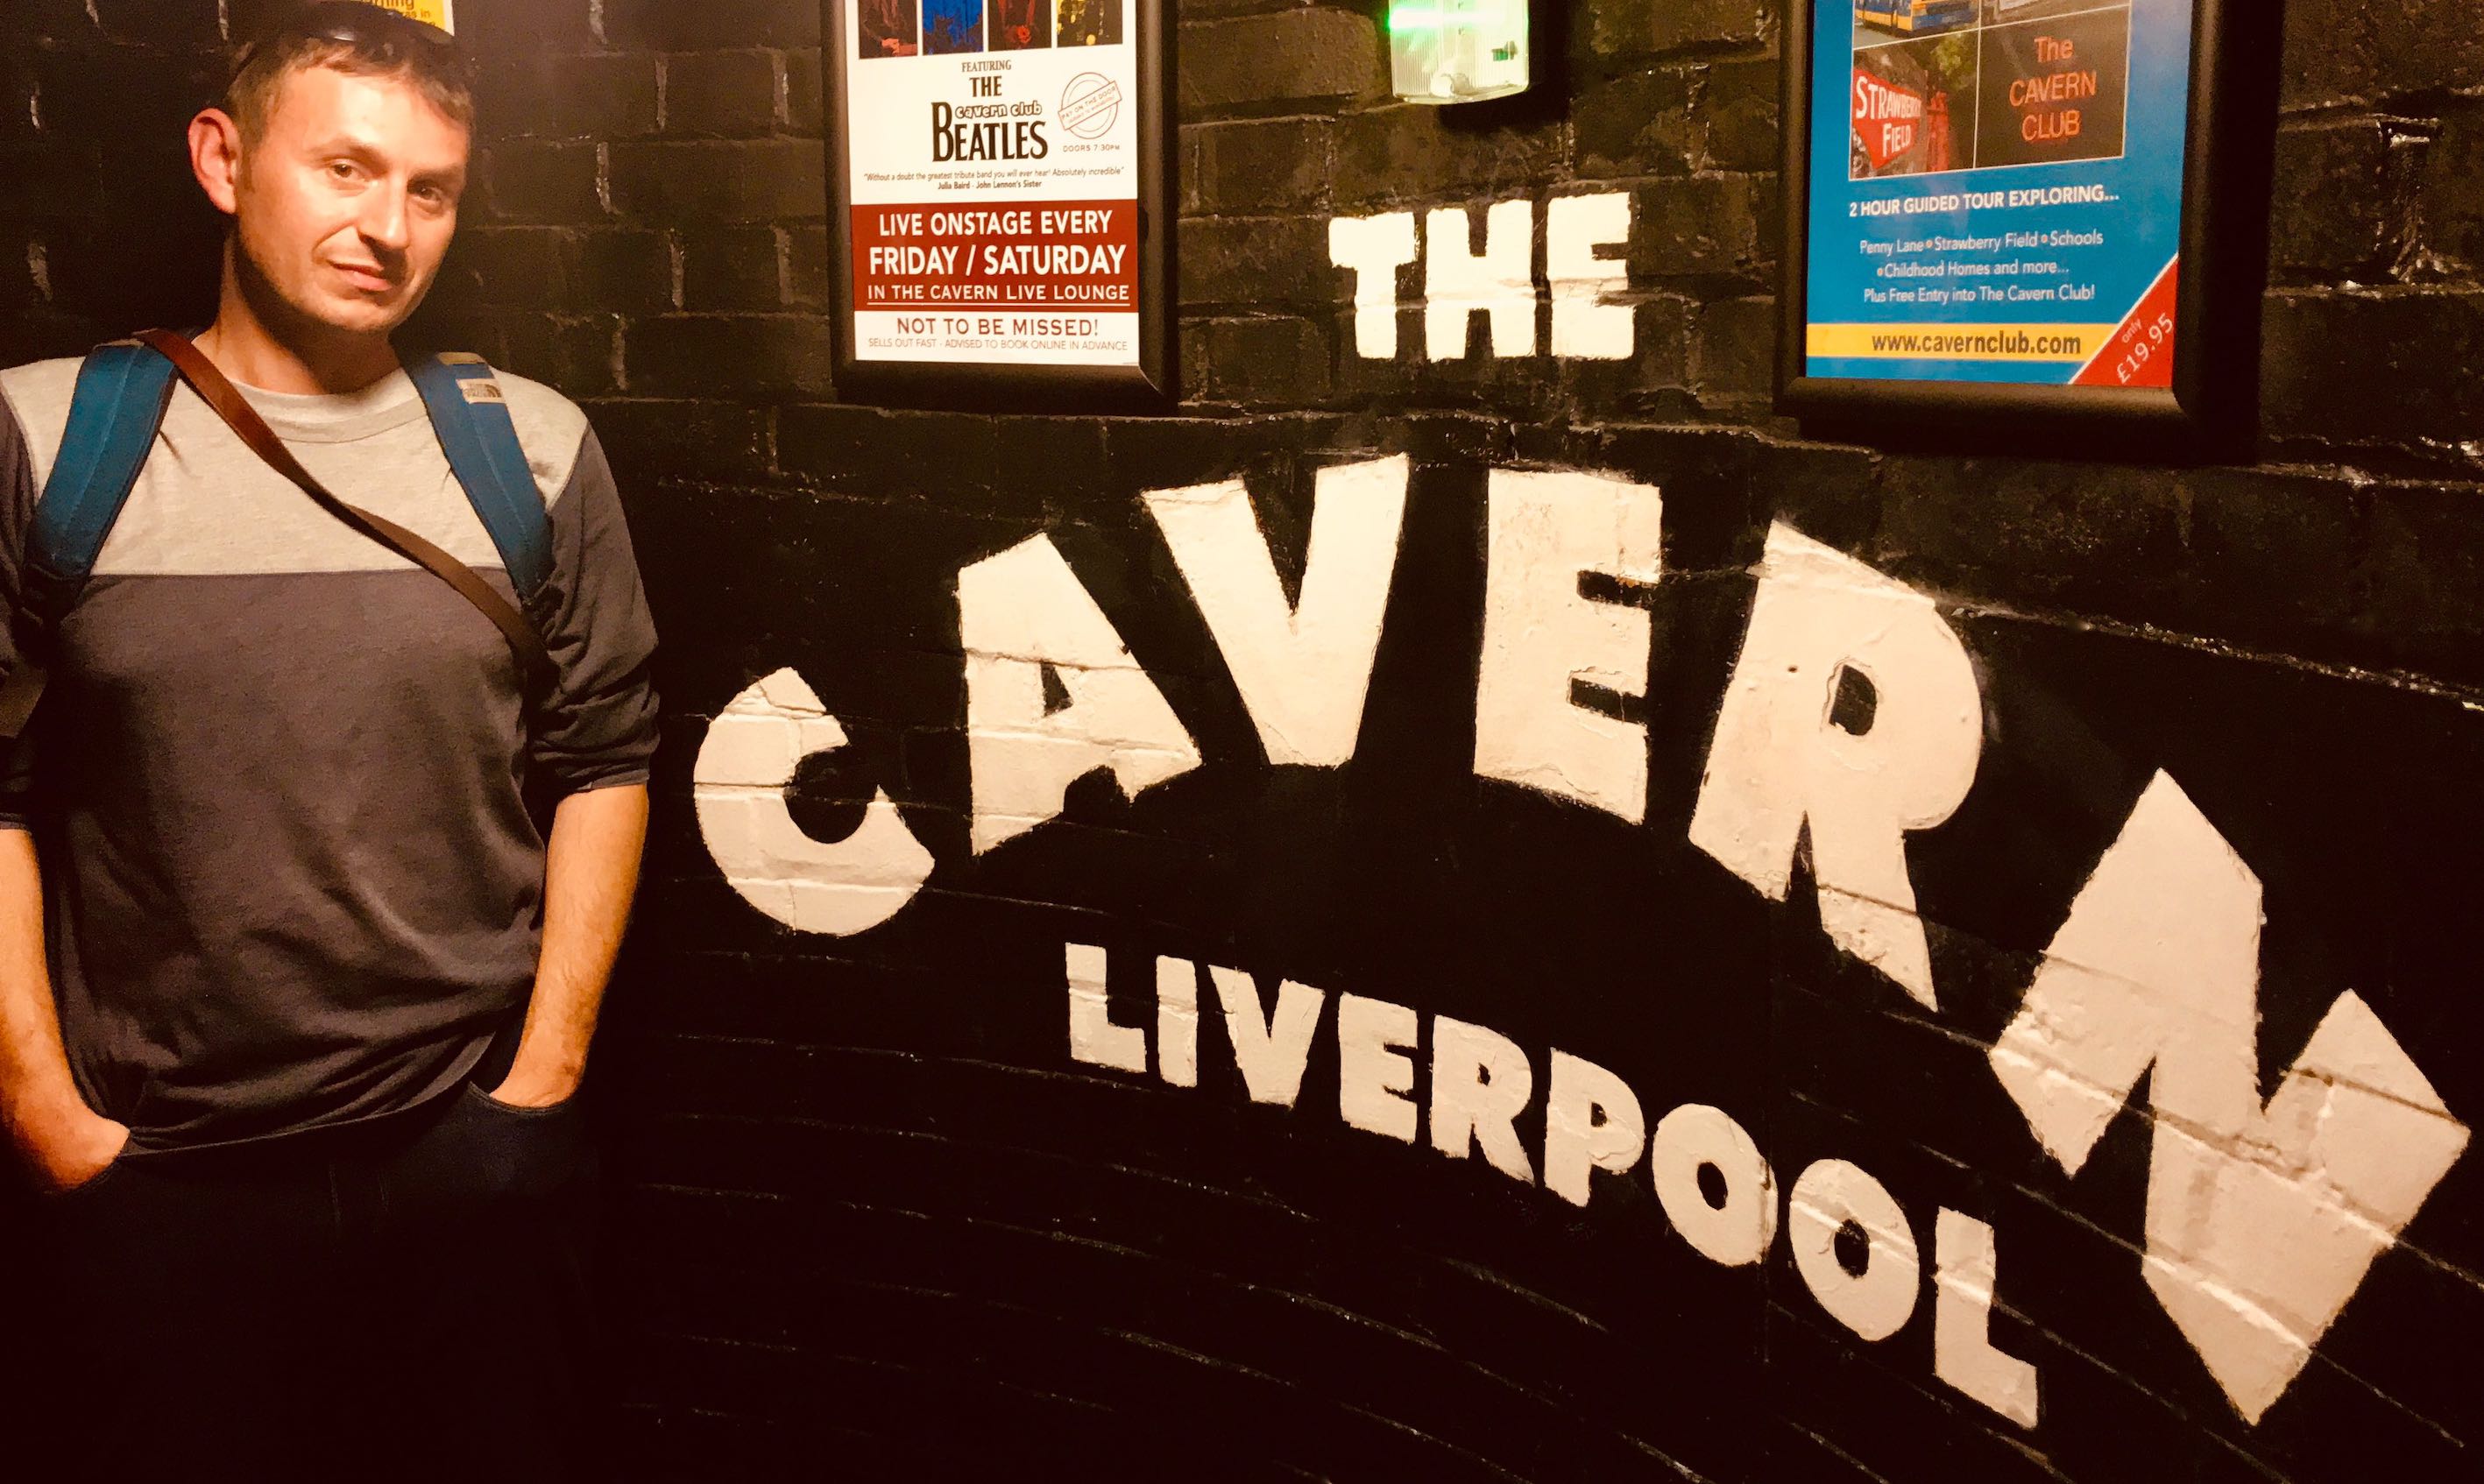 The Cavern Club Liverpool.